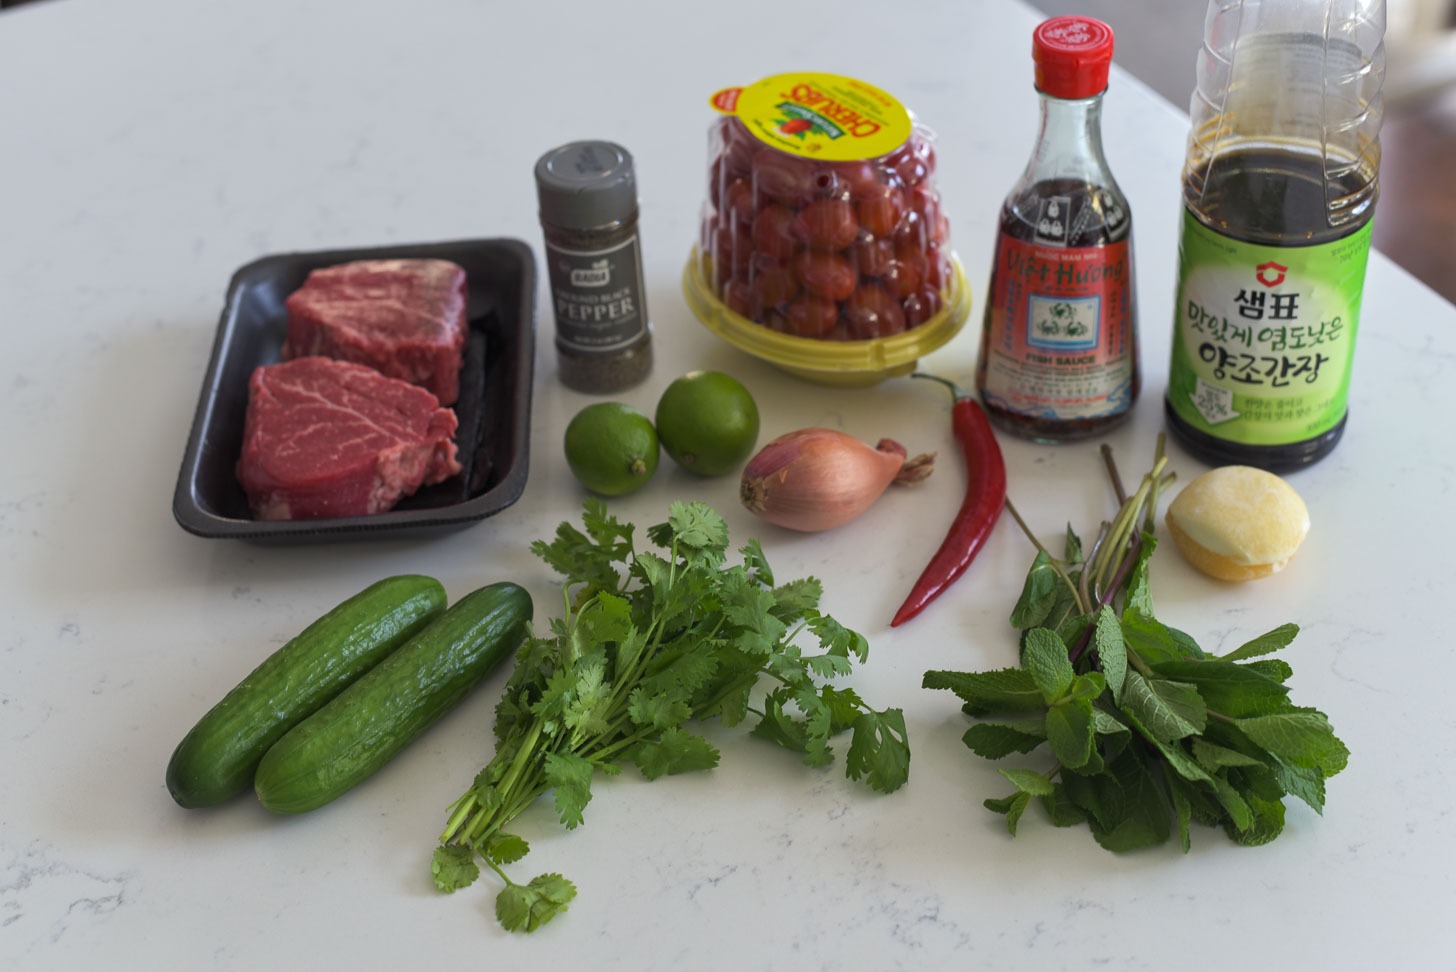 Ingredients for making Thai beef salad (Yum Nua).